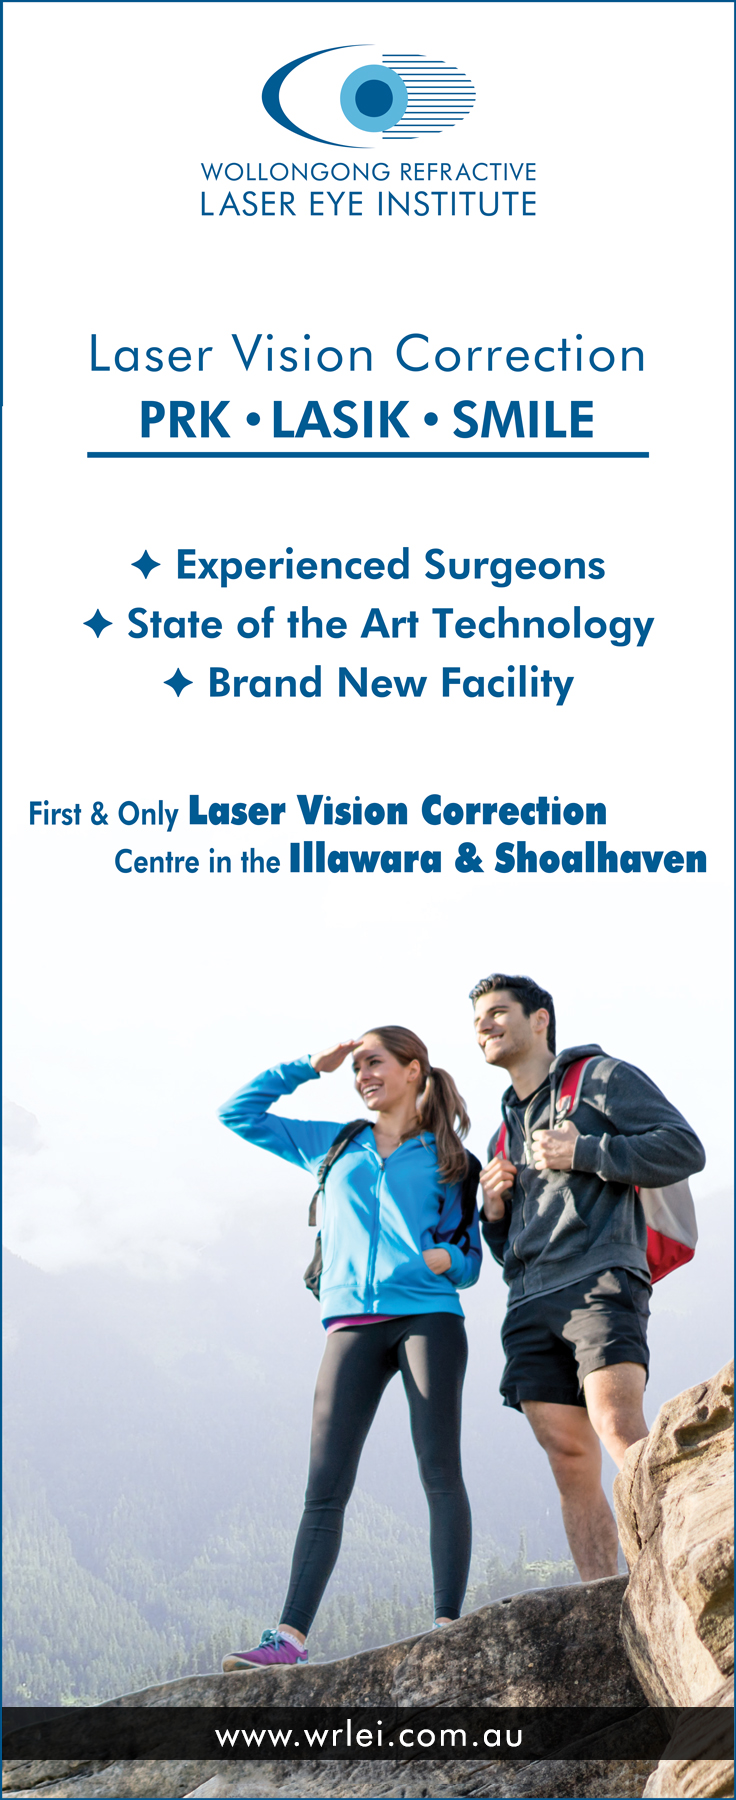 Wollongong Refractive Laser Eye Institute